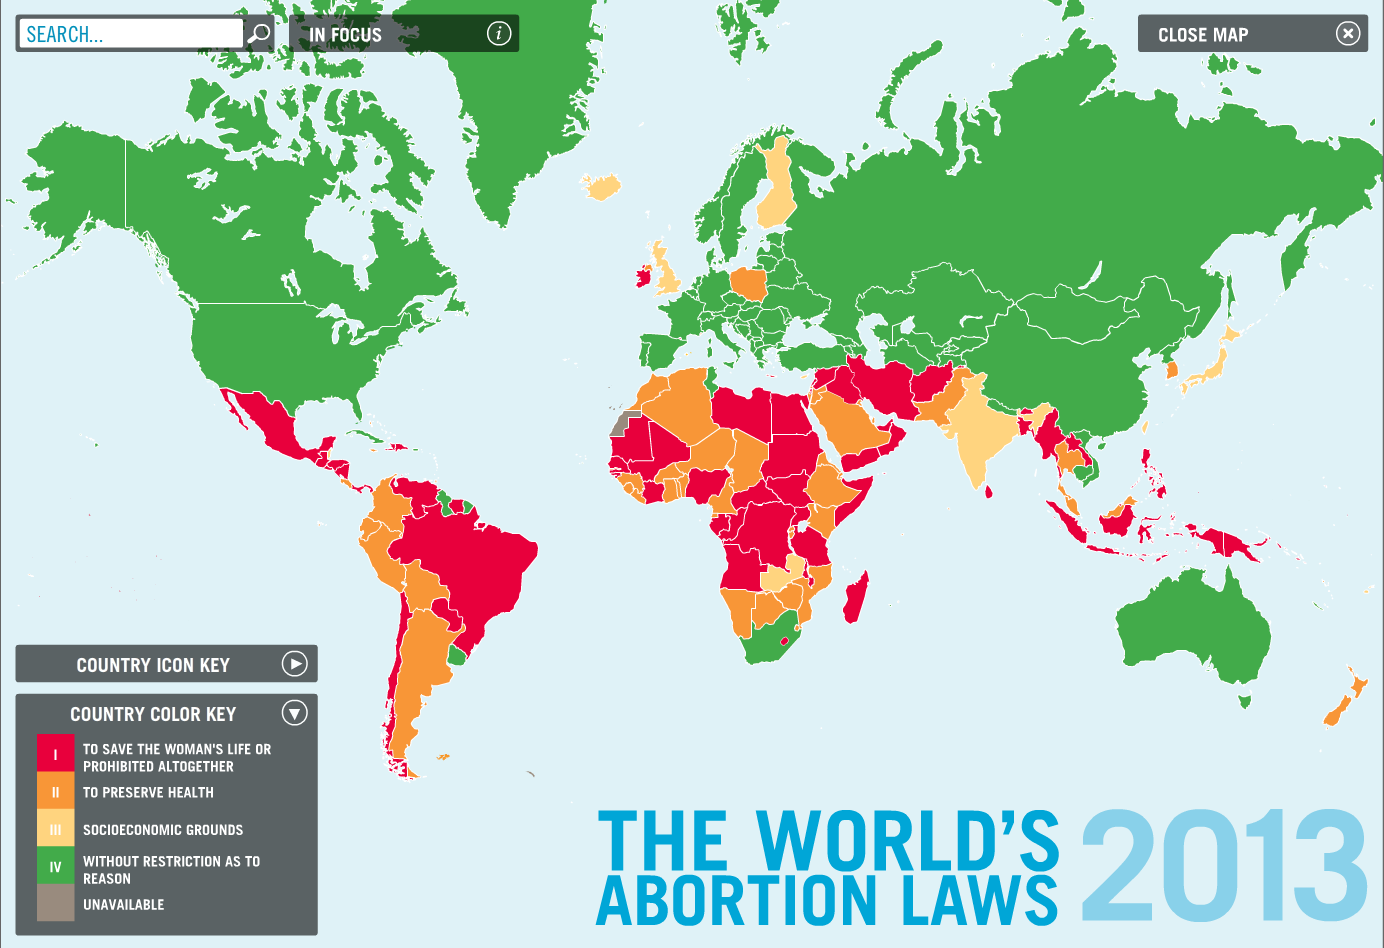 world abortion laws 2013